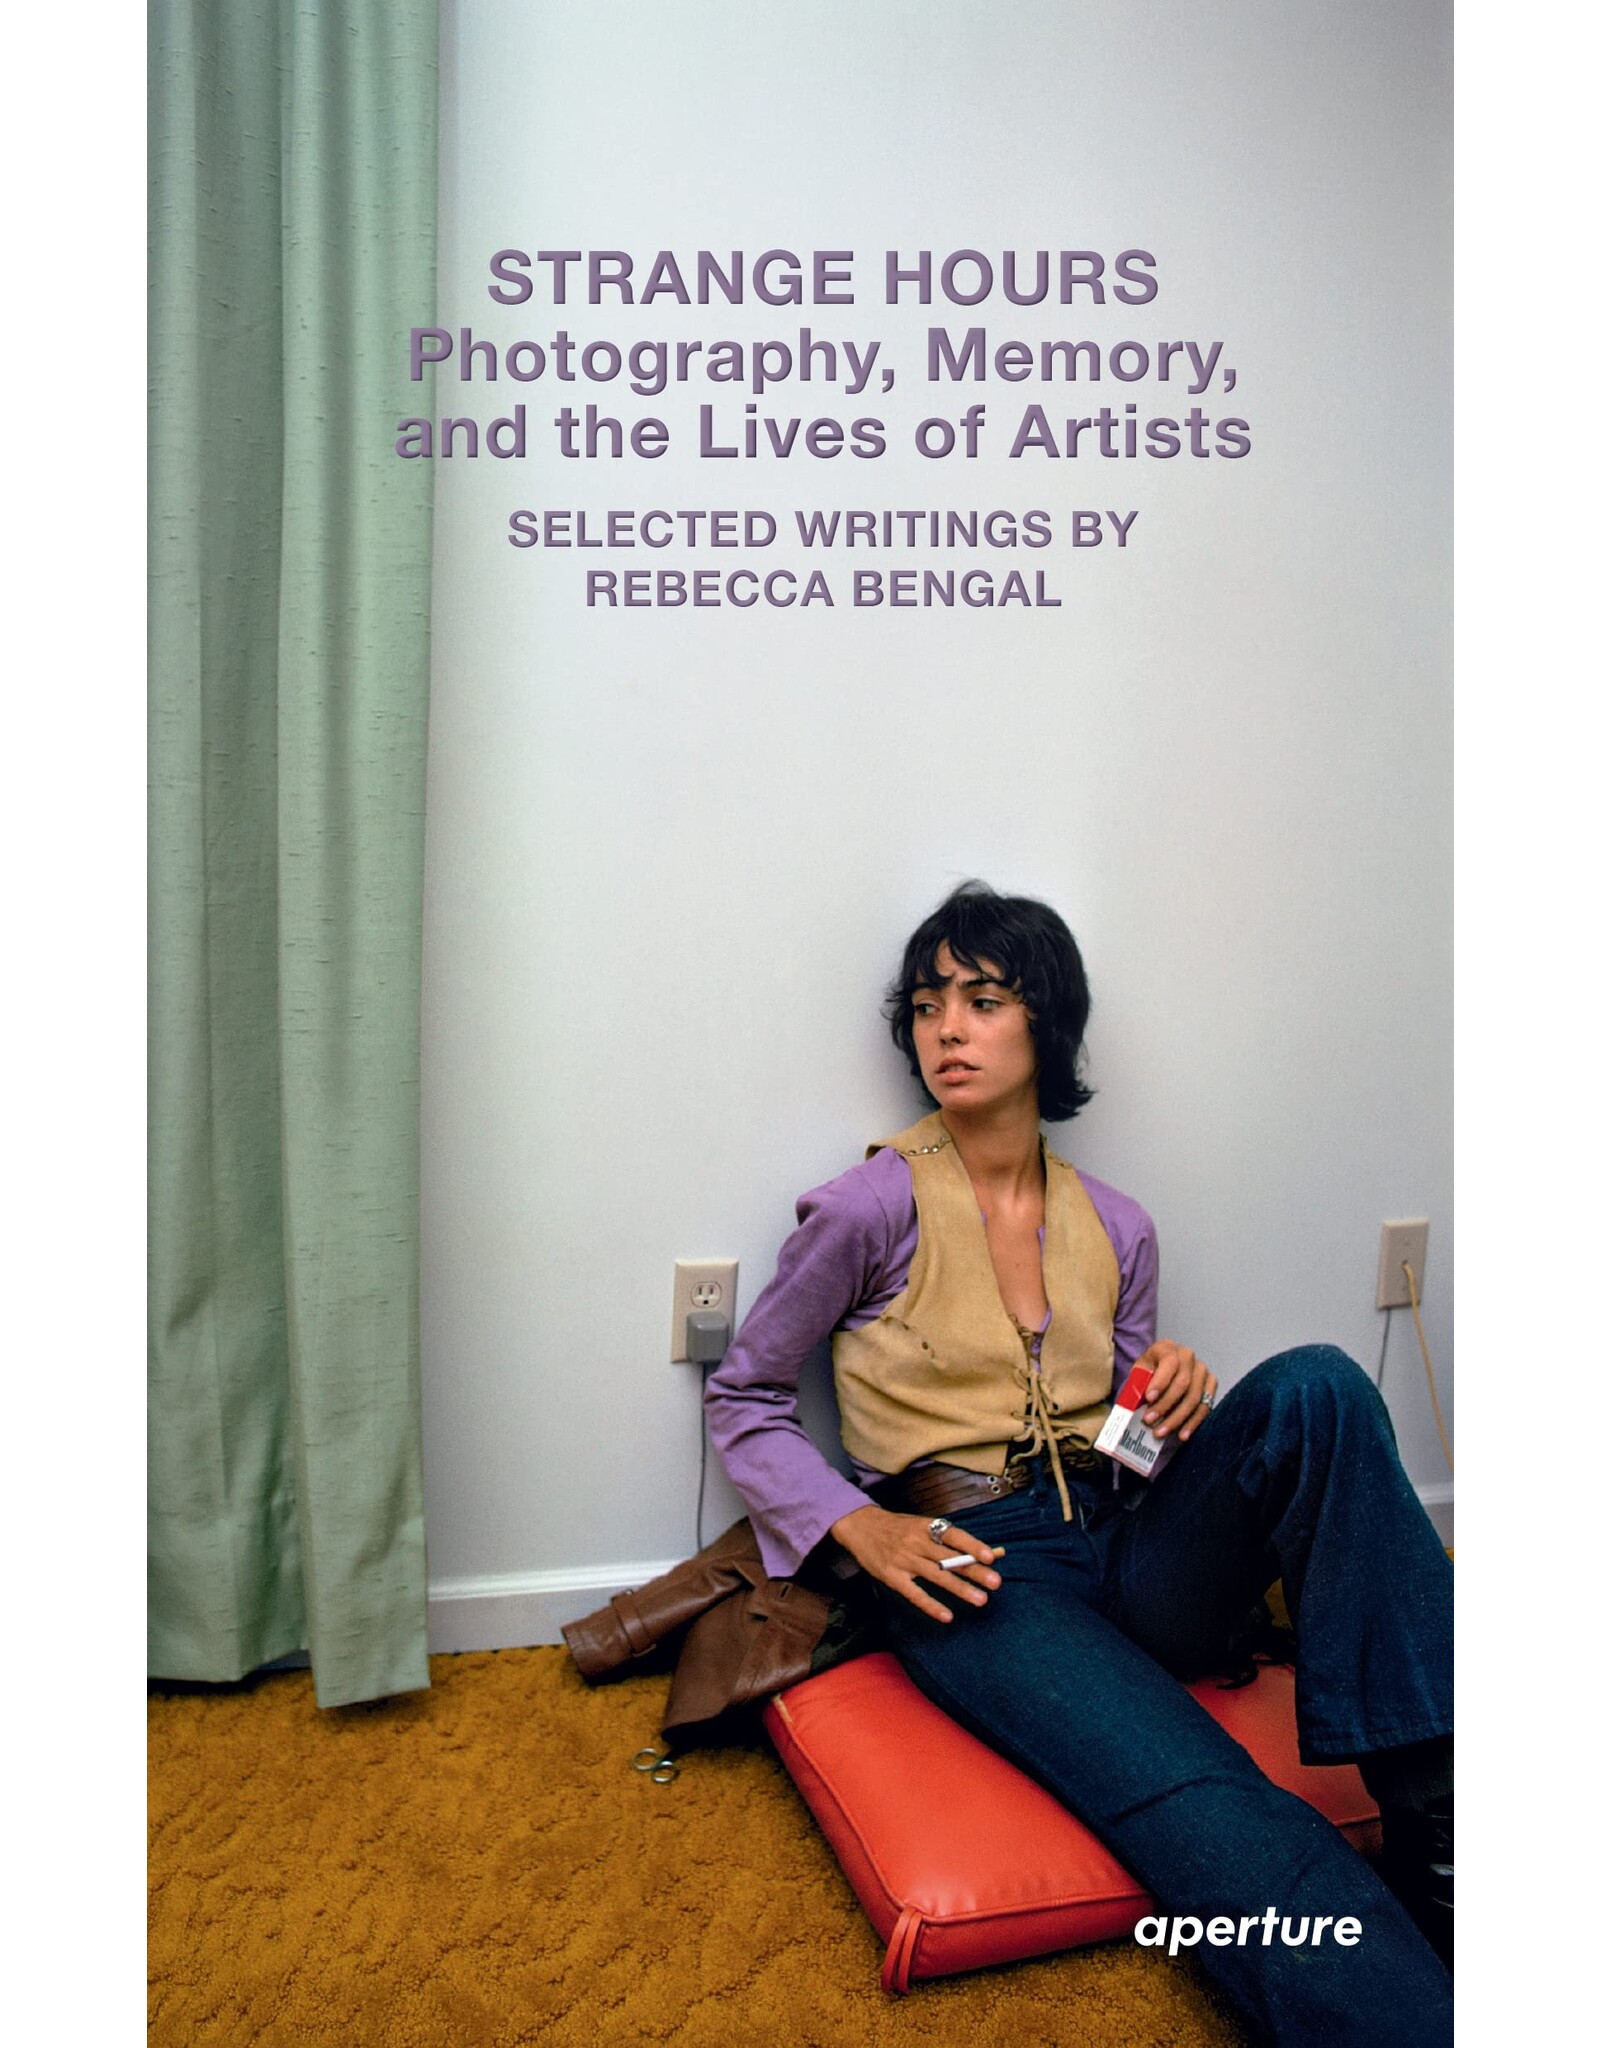 Rebecca Bengal: Strange Hours